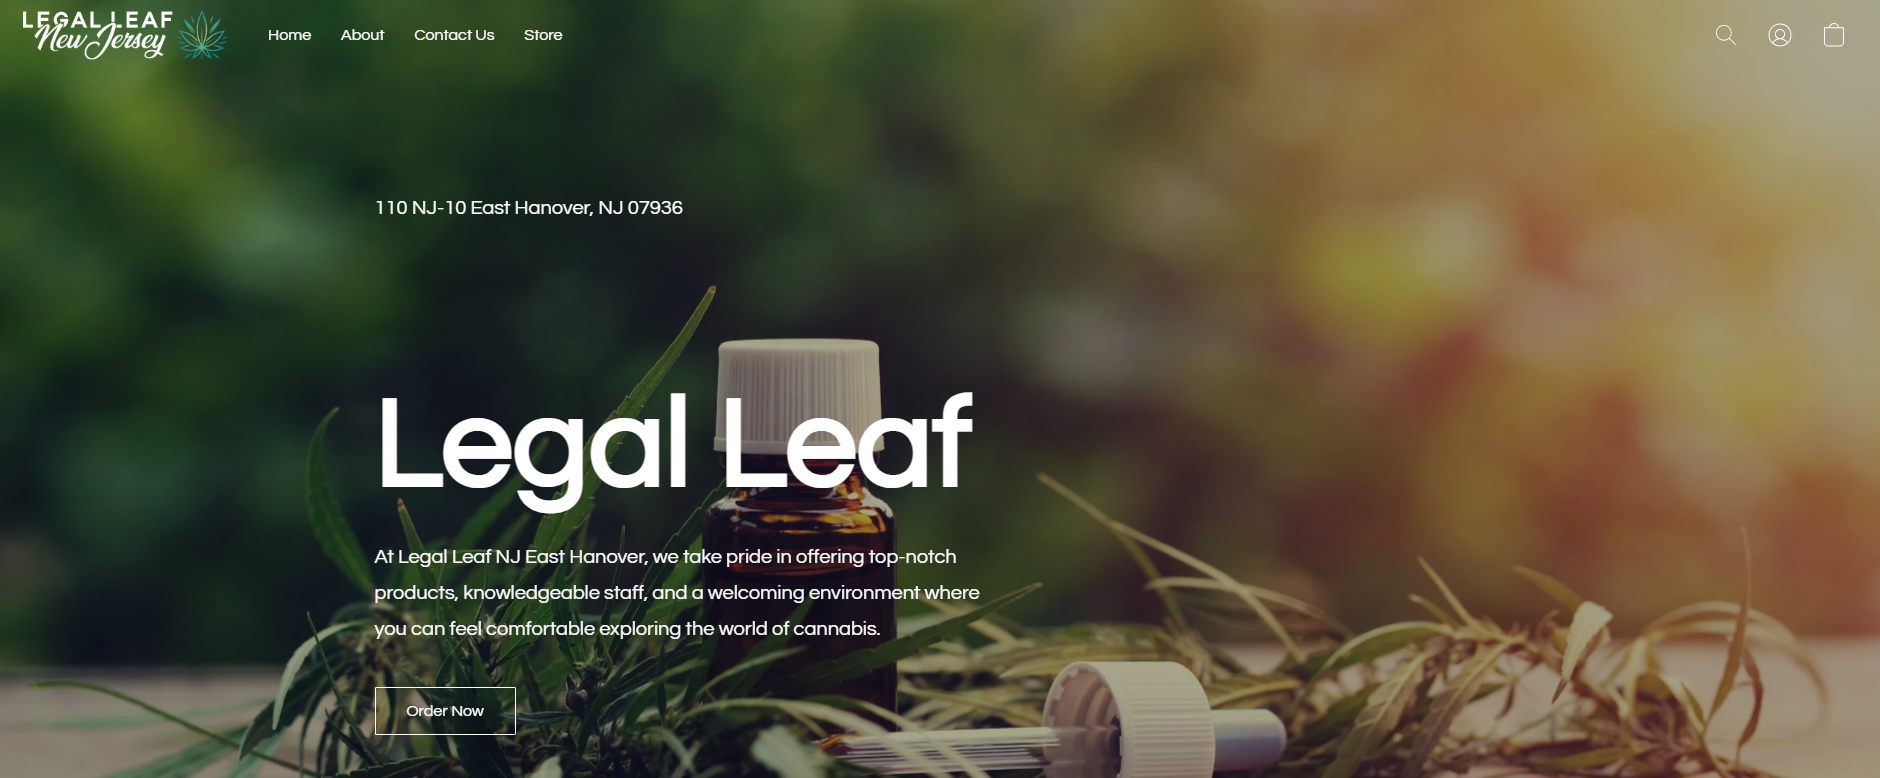 Legal Leaf New Jersey East Hanover